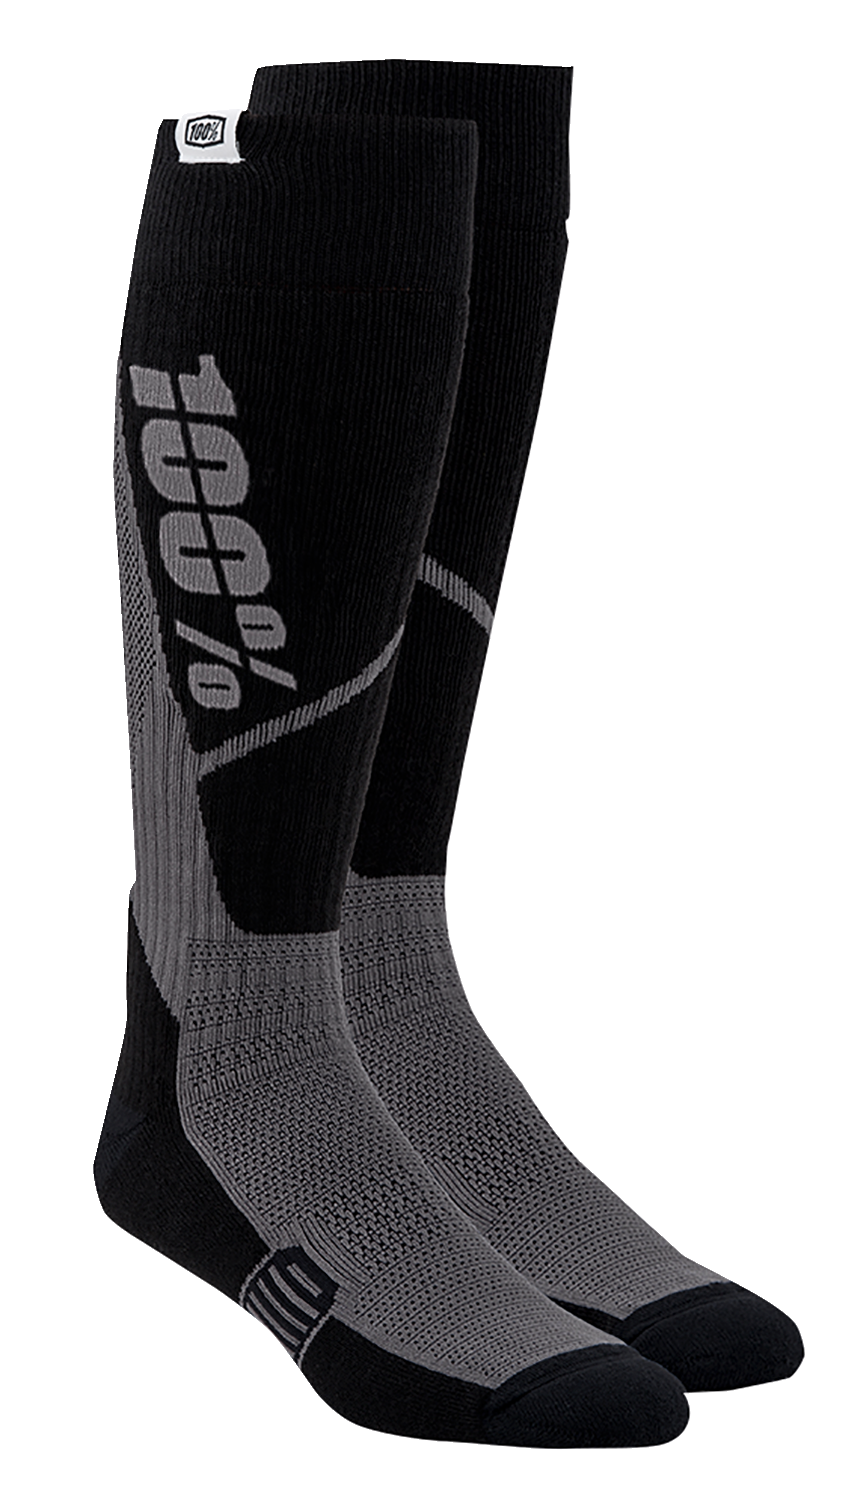 100% Torque Comfort Moto Socks - Black - Small/Medium 20053-00001